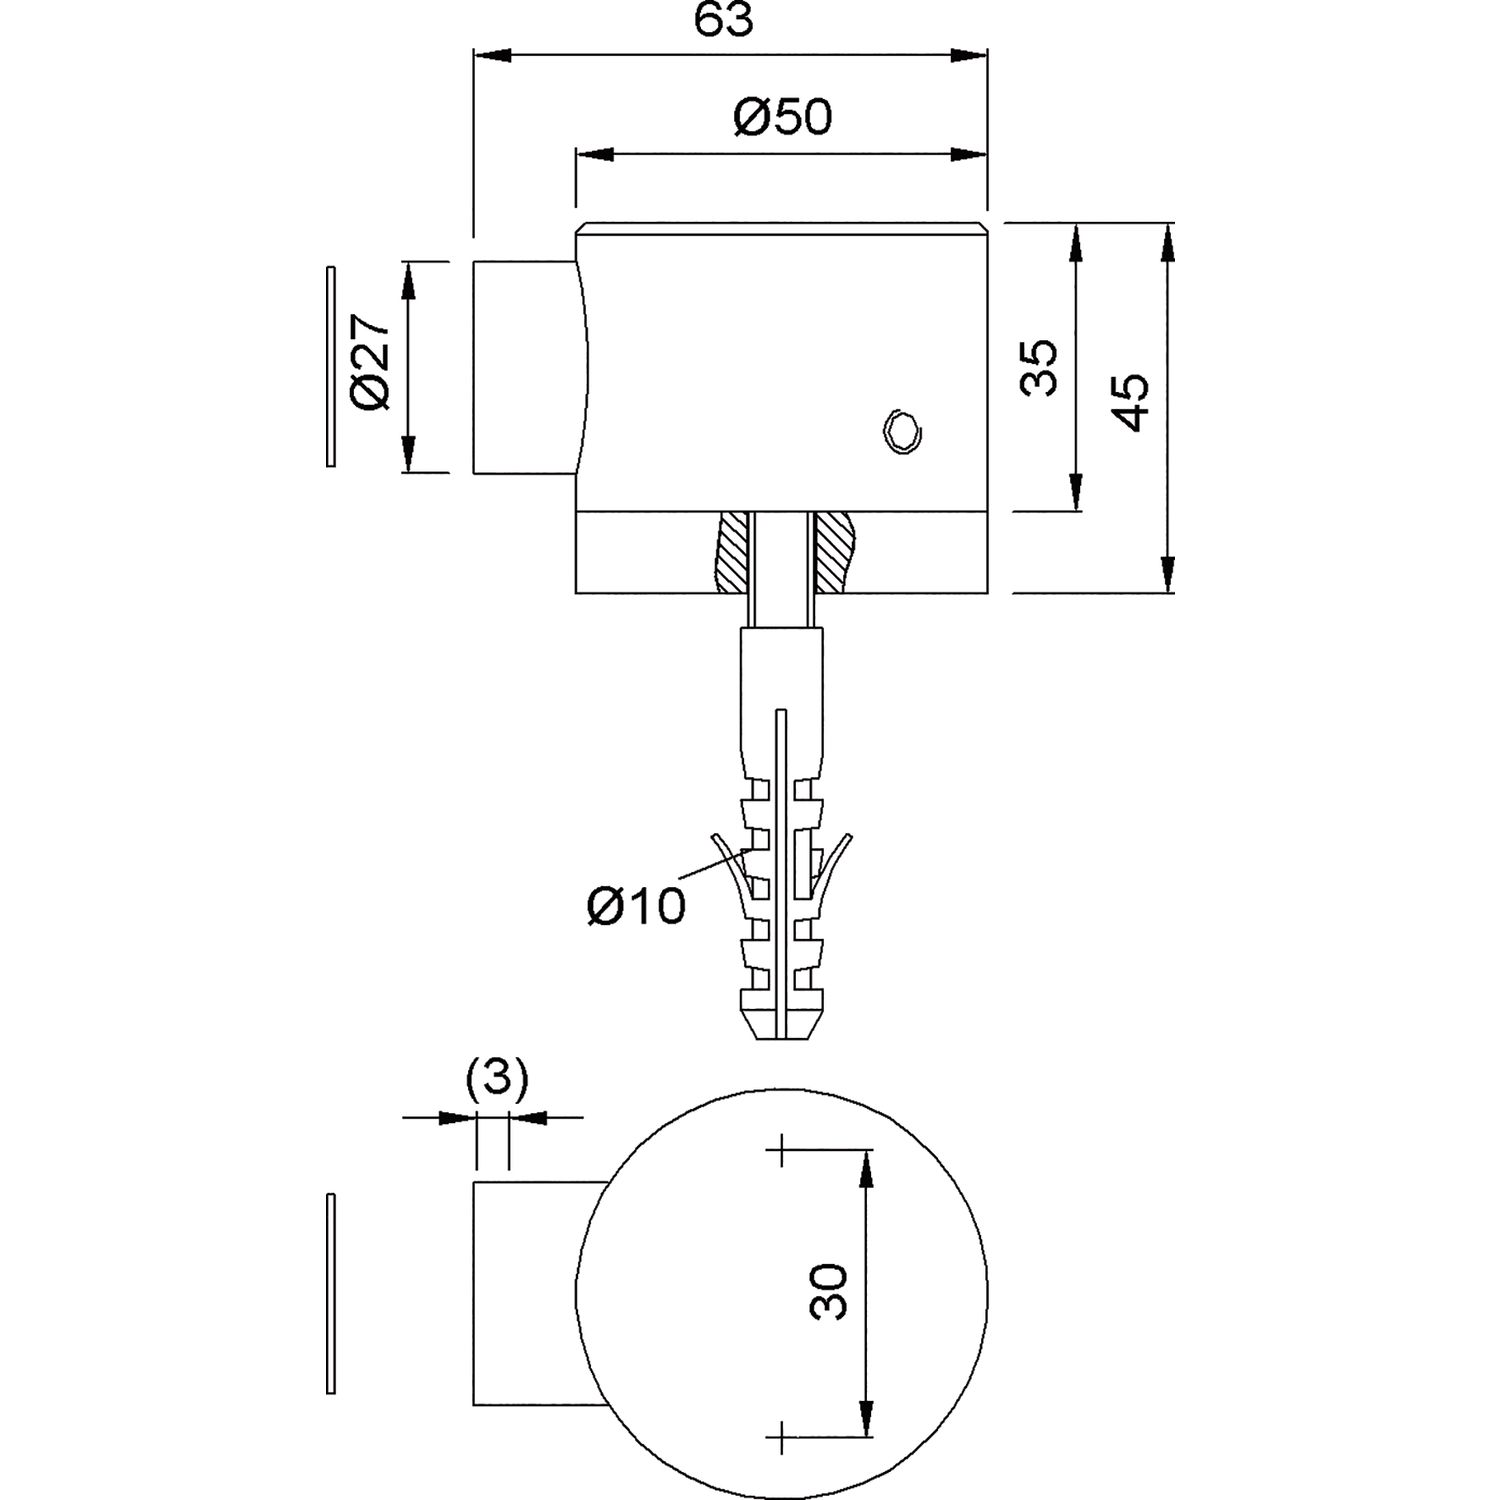 Türhalter/Türfeststeller 1015 mit Magnet ø 50 mm, Edelstahl matt